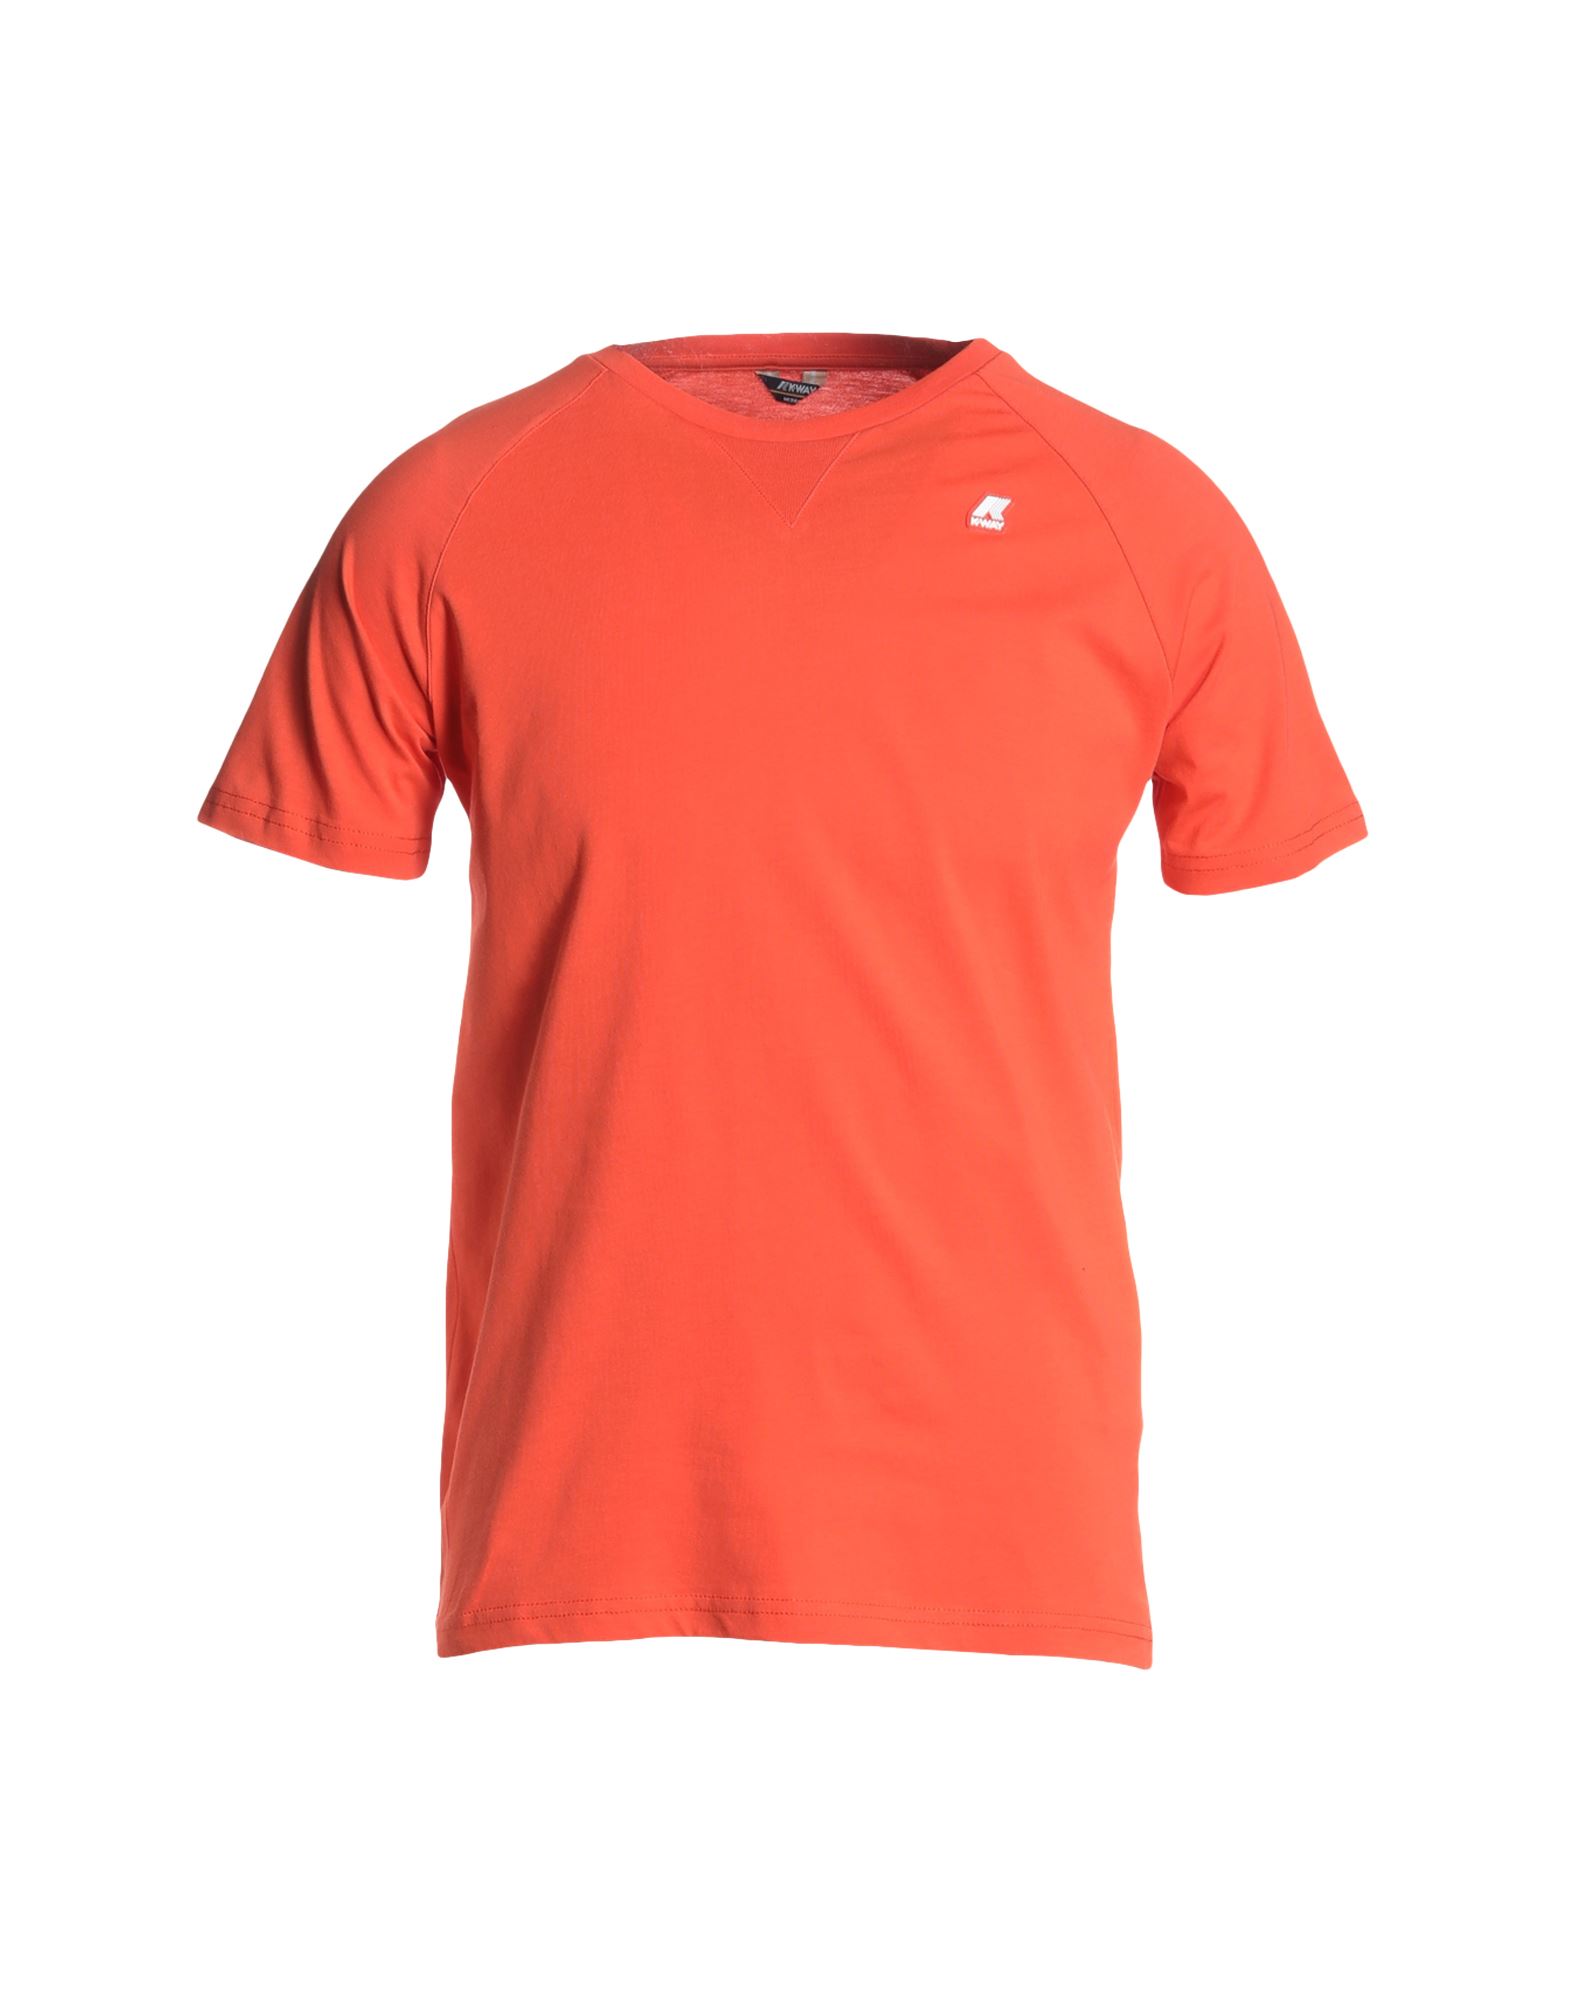 K-way Elliot Kway Tshirt In Cotton With Logo In Orange